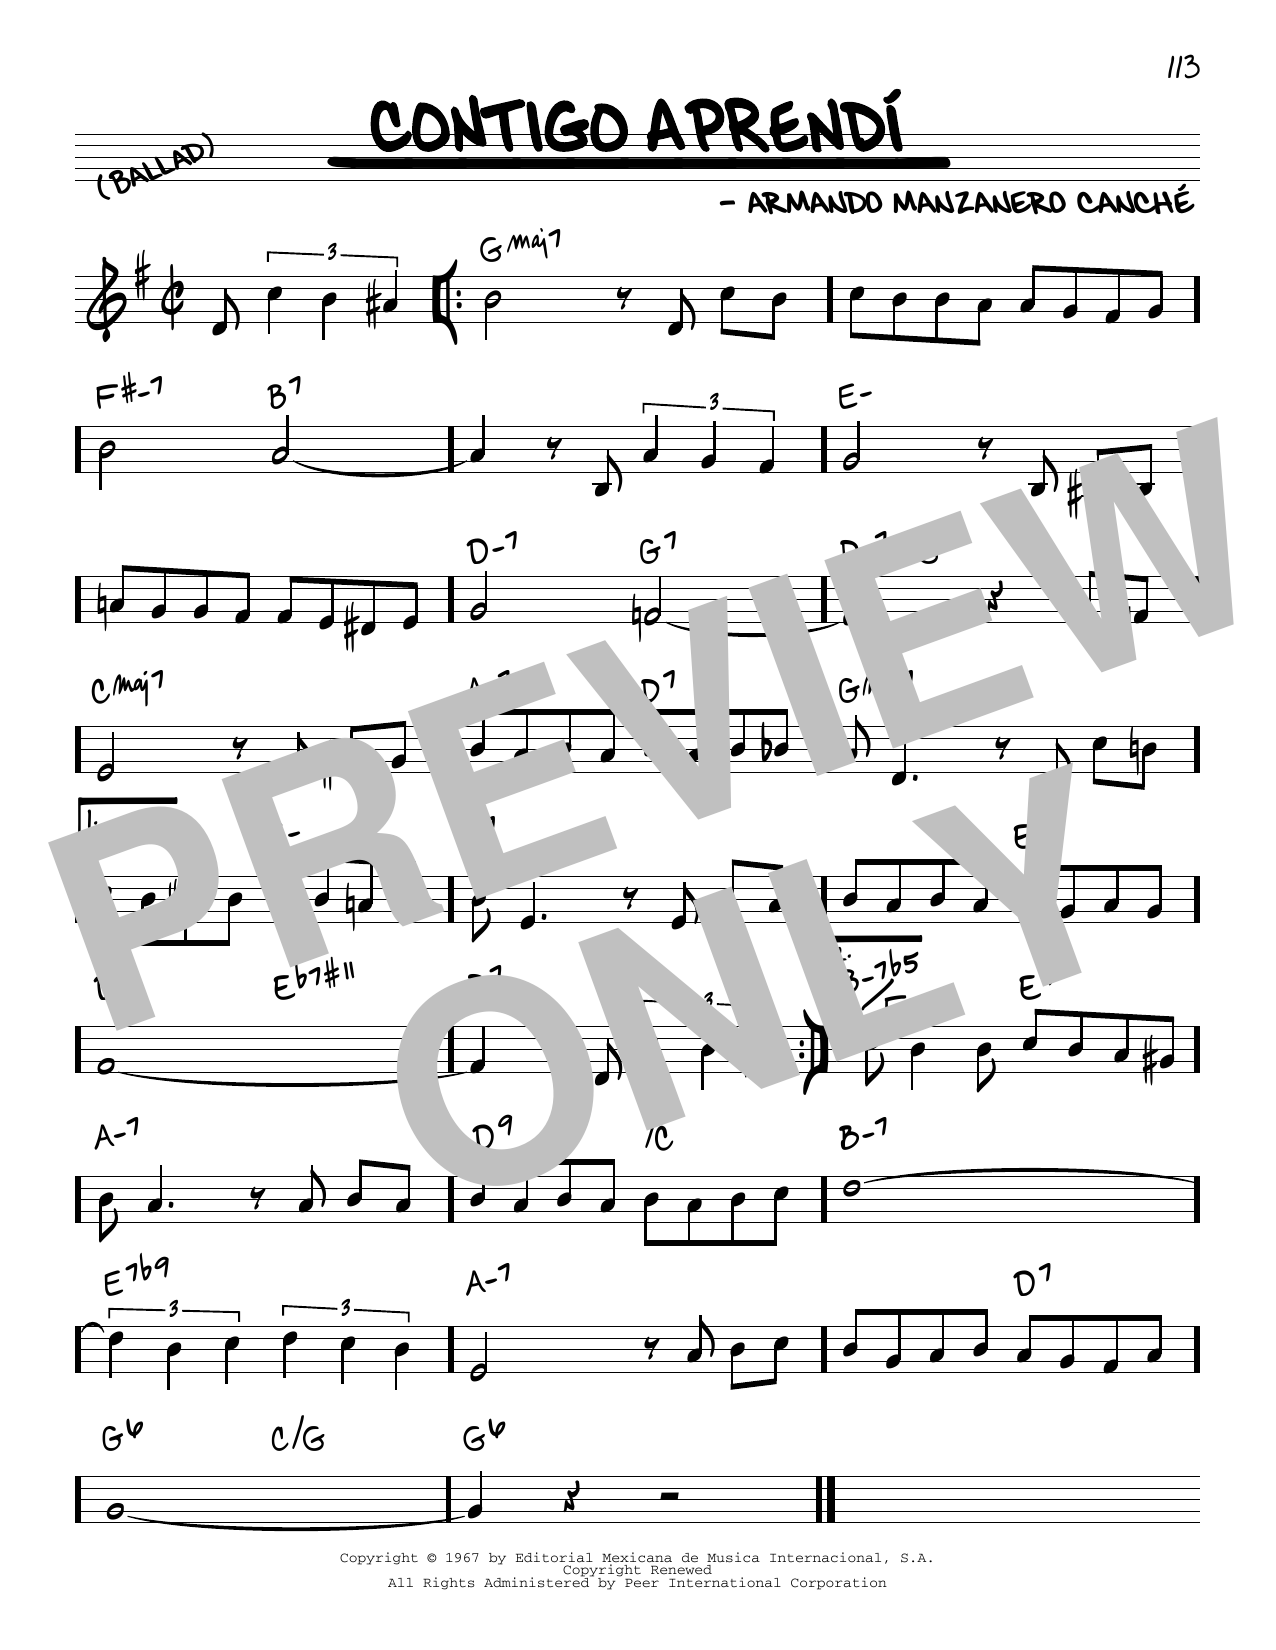 Download Armando Manzanero Canche Contigo Aprendi Sheet Music and learn how to play Piano, Vocal & Guitar Chords (Right-Hand Melody) PDF digital score in minutes